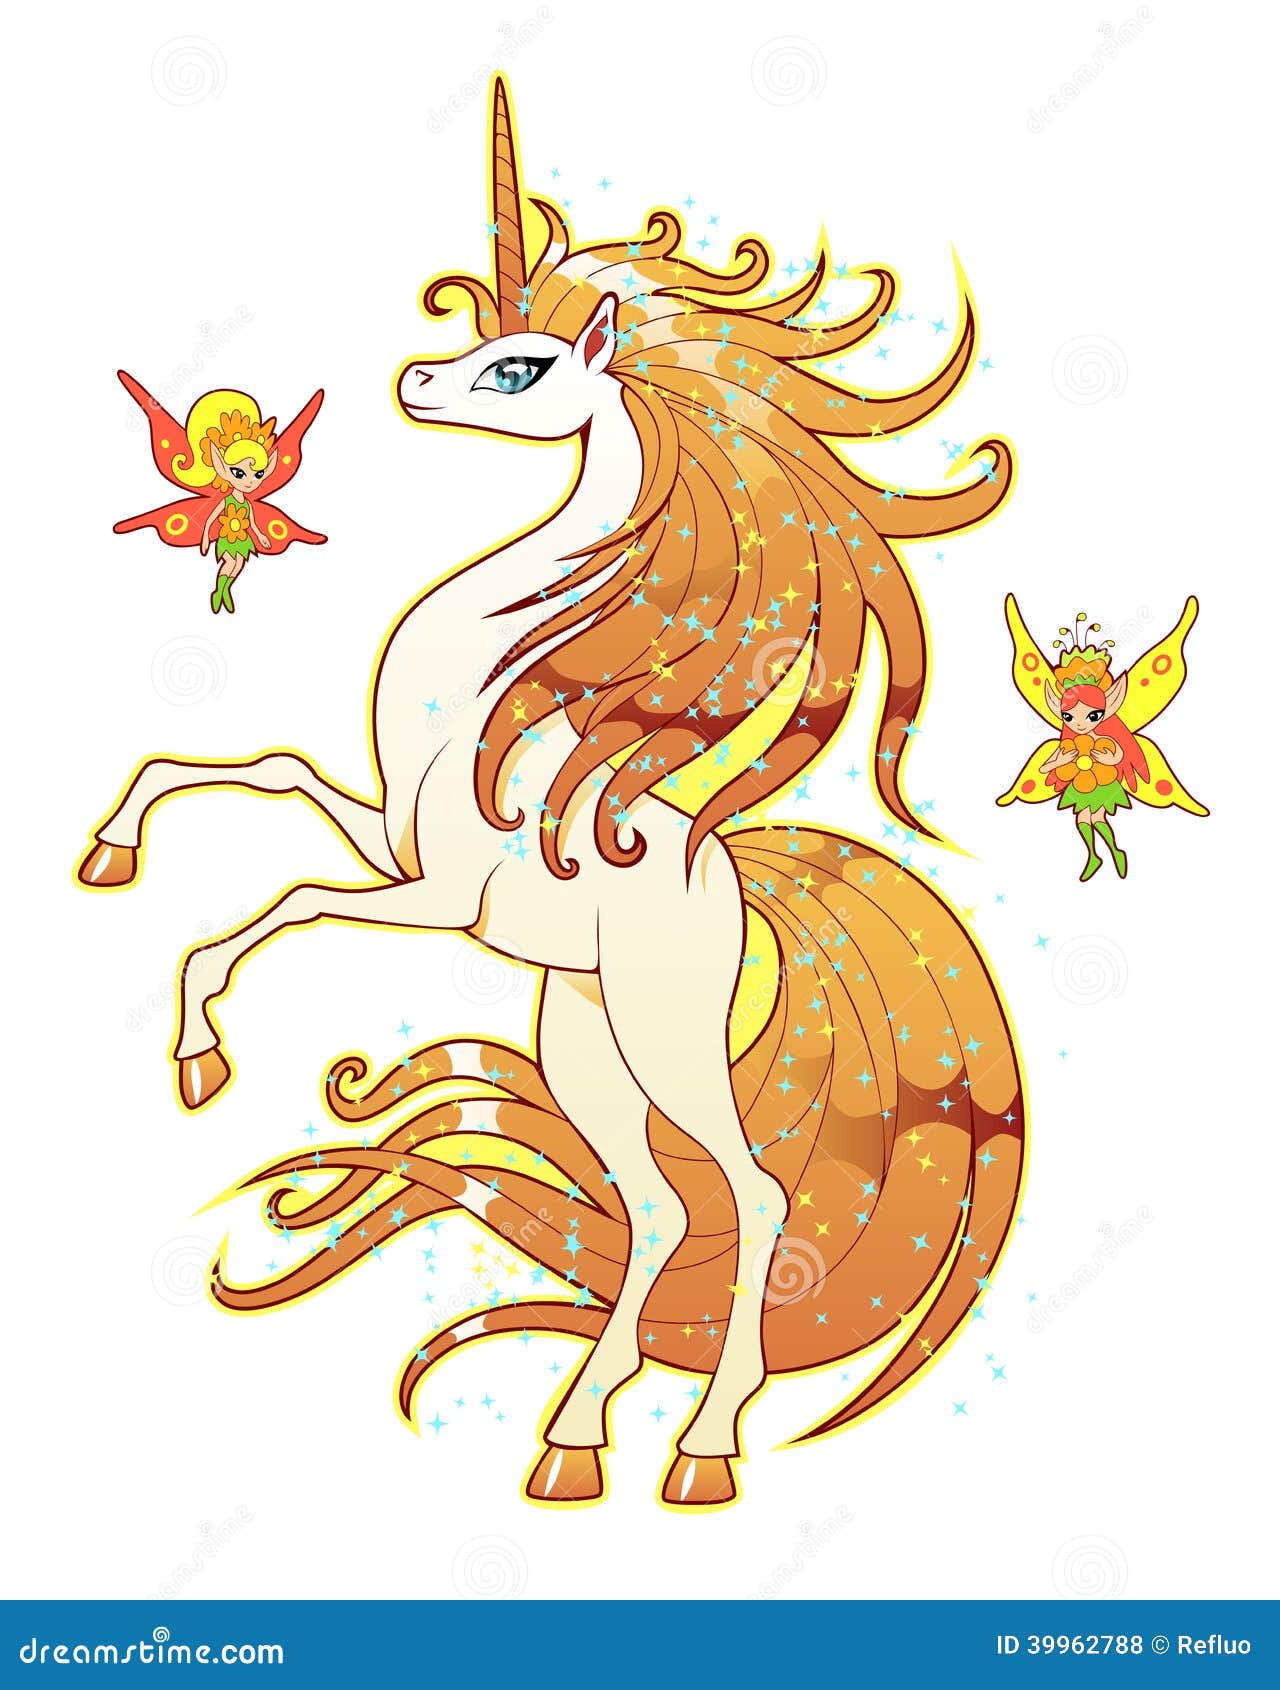 Unicorn and fairies stock illustration. Illustration of artwork - 39962788